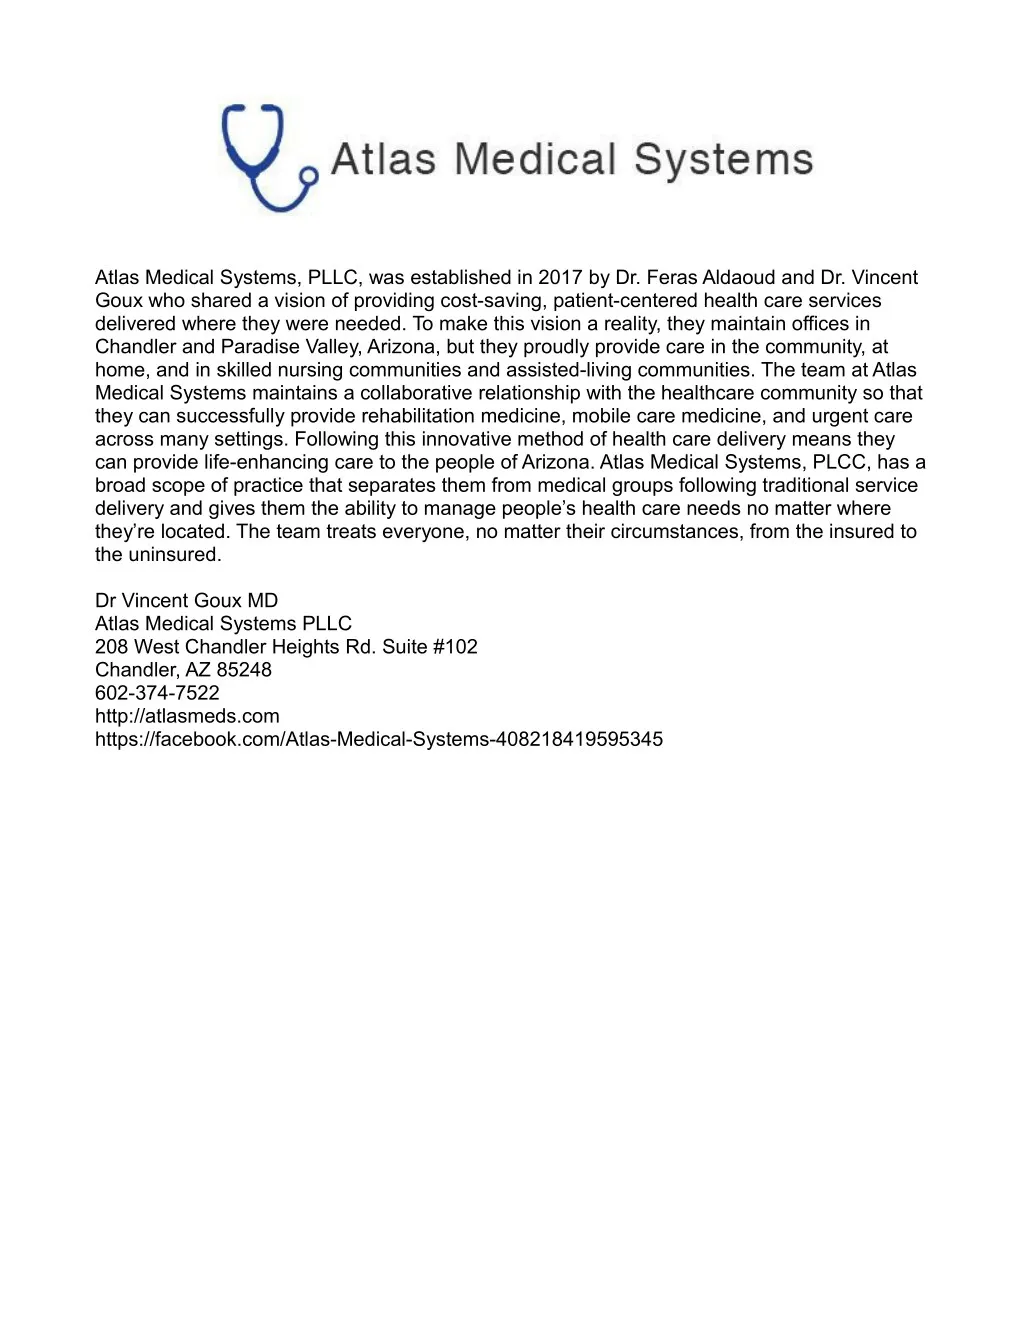 atlas medical systems pllc was established